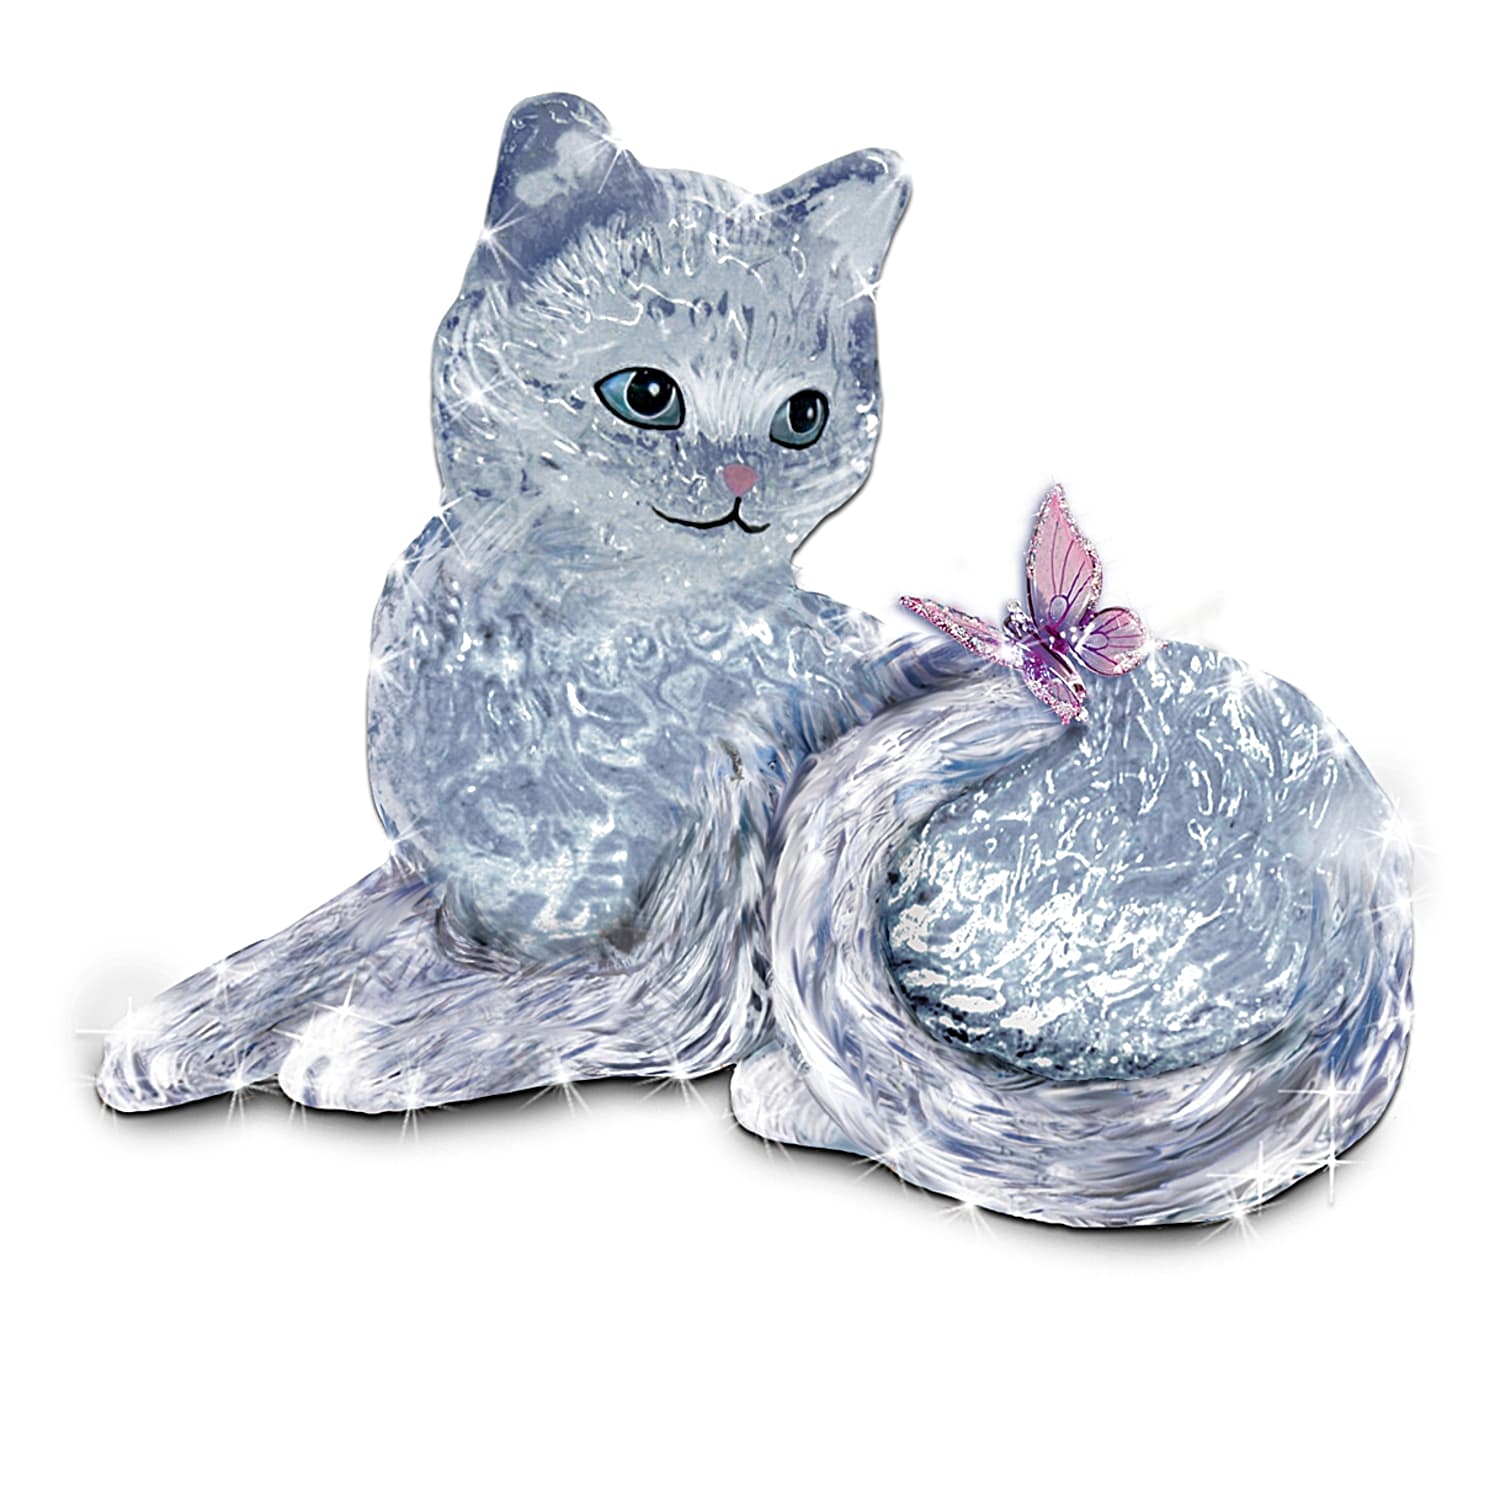 Crystal cat. Swarovski Cat Crystal Art Glass Figurine. Хрустальная кошка. Кошка из муранского стекла. Кристальная кошка.